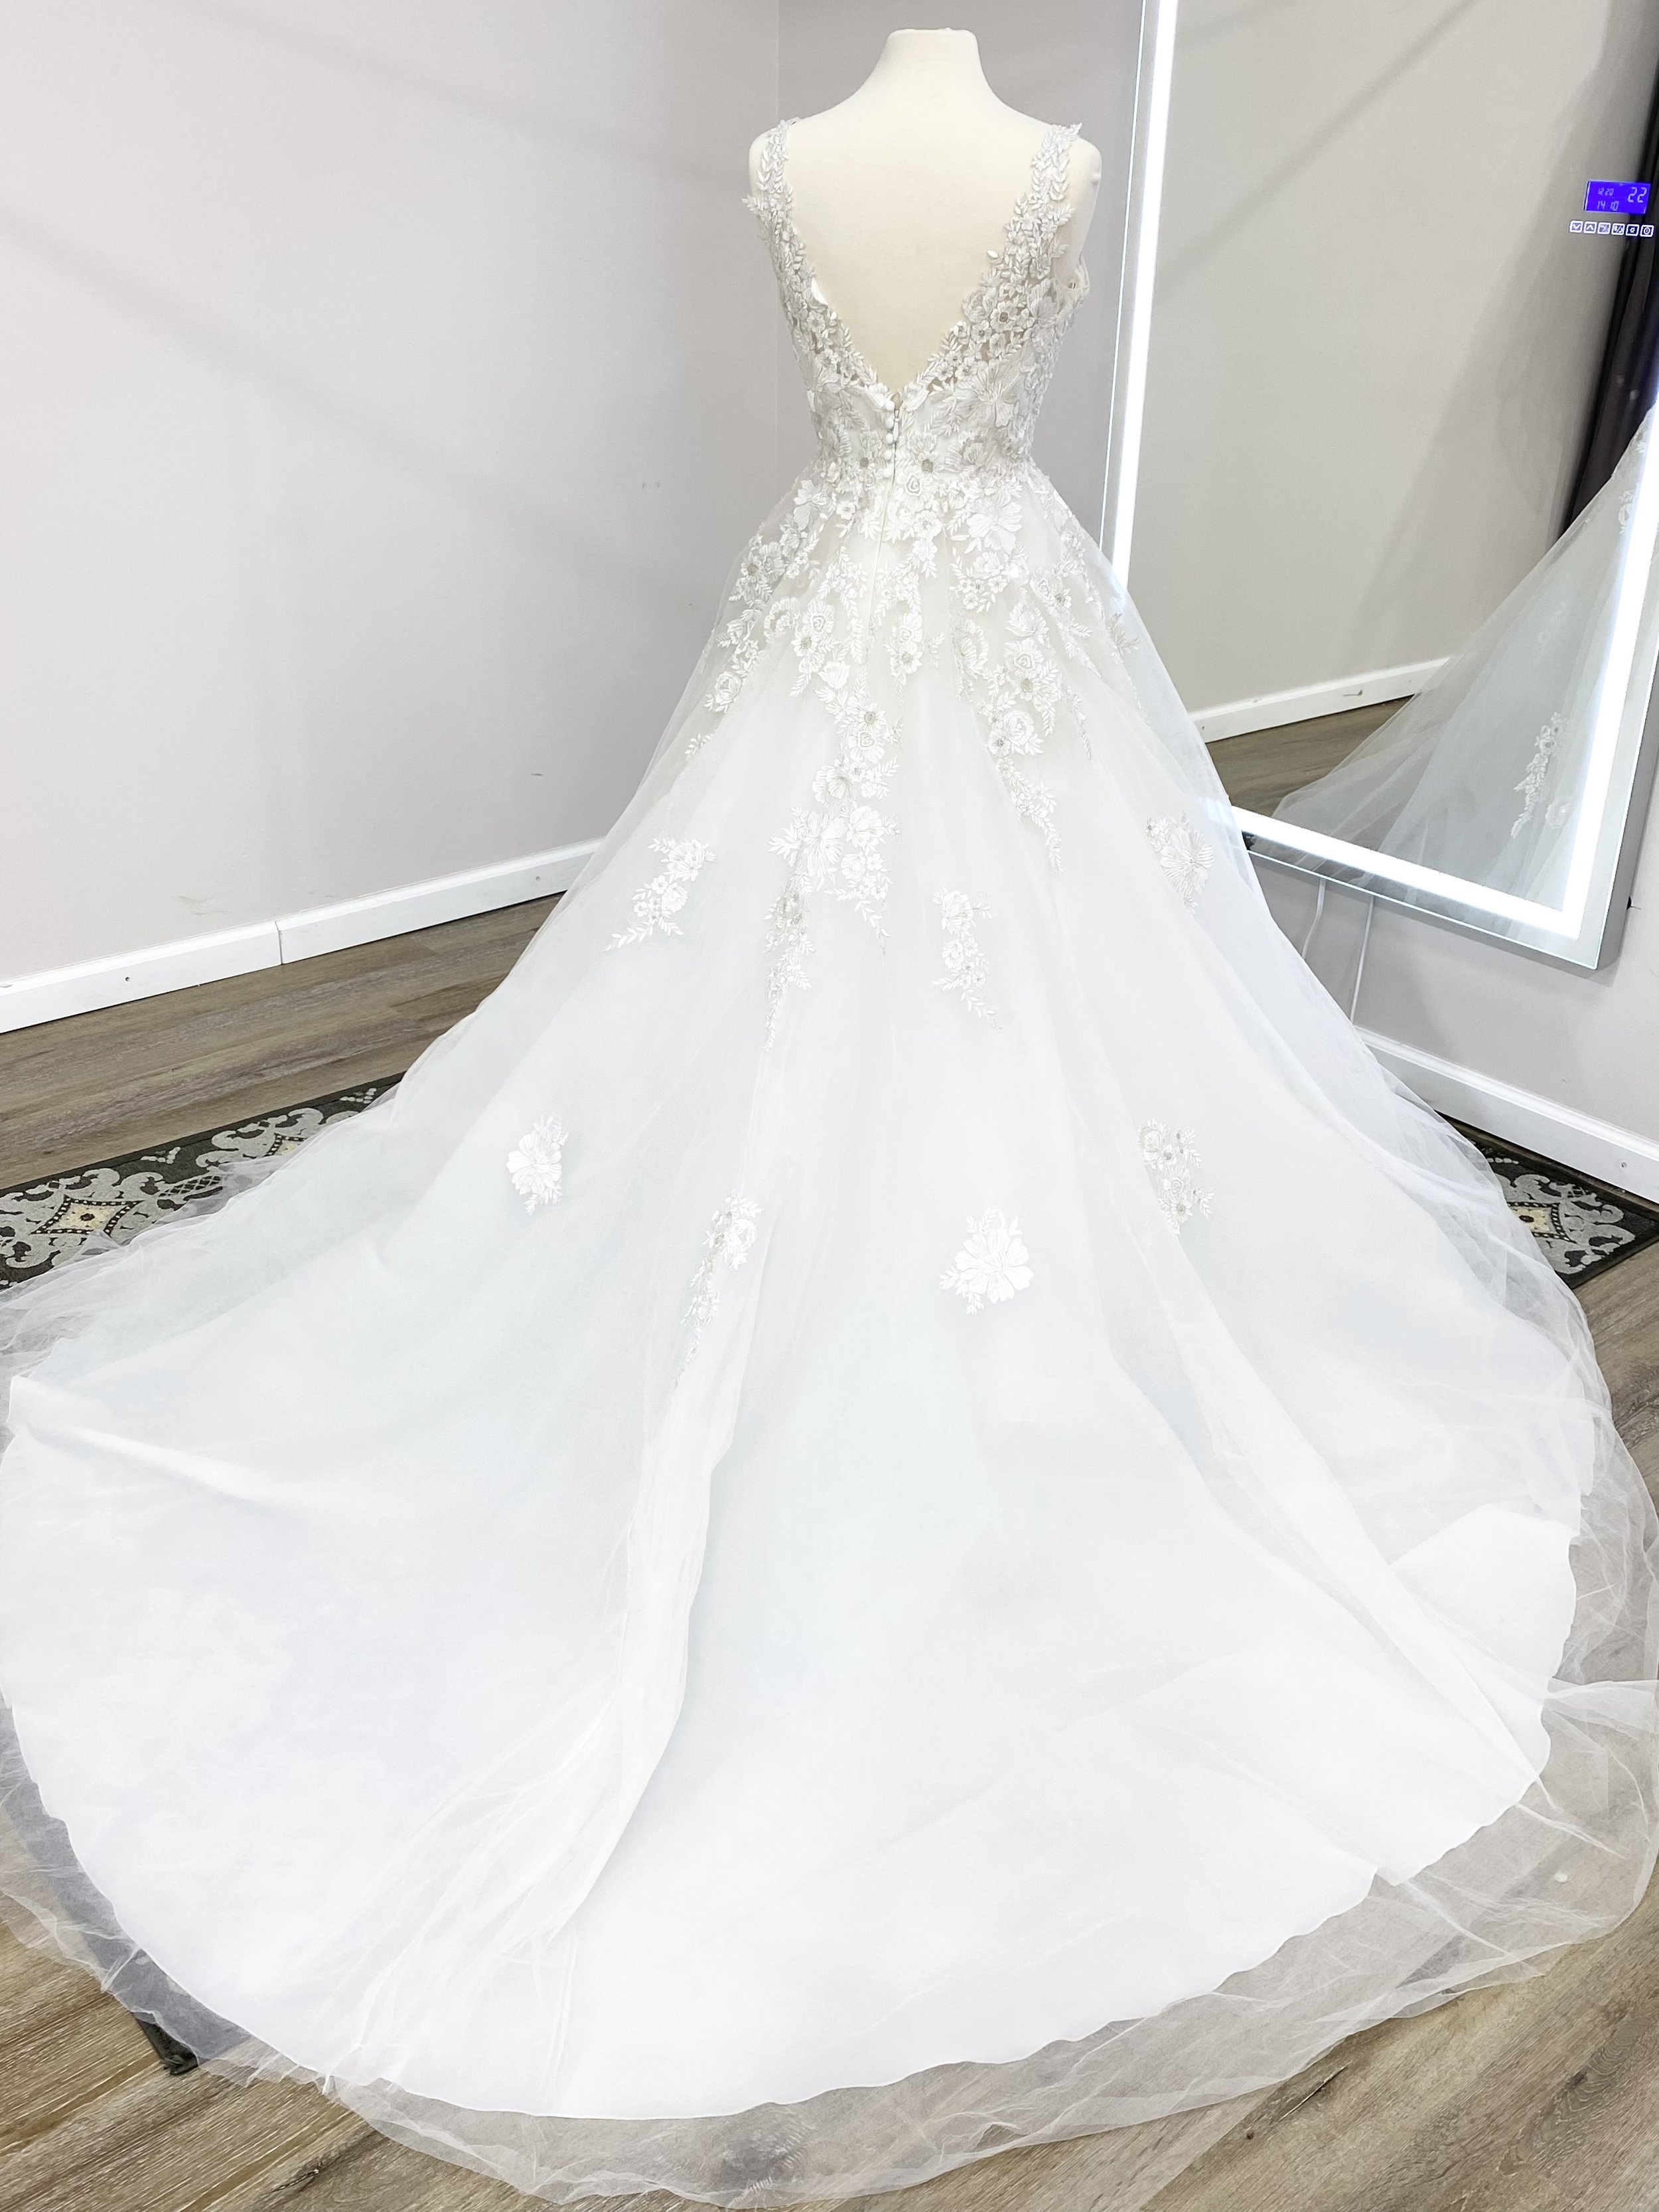 Wedding Gown In Chennai | Bridal Frock Shop In Chennai | Christian wedding  gowns, Christian wedding dress, Wedding gowns online